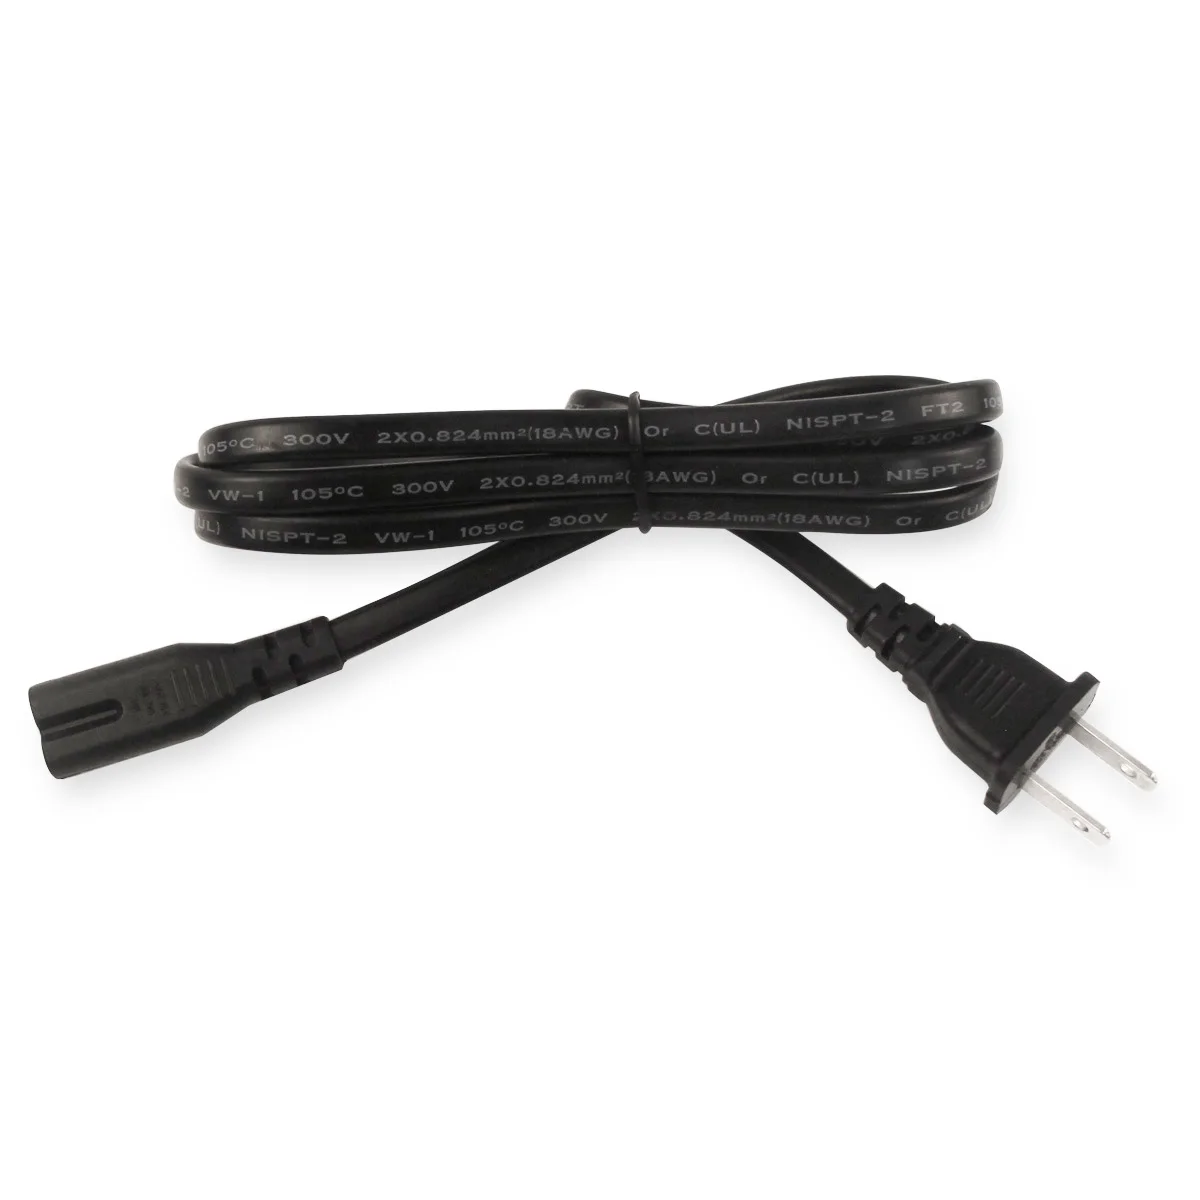 ac extension Cable PVC black us male to female Nema5-15P splitter y type power cord 25